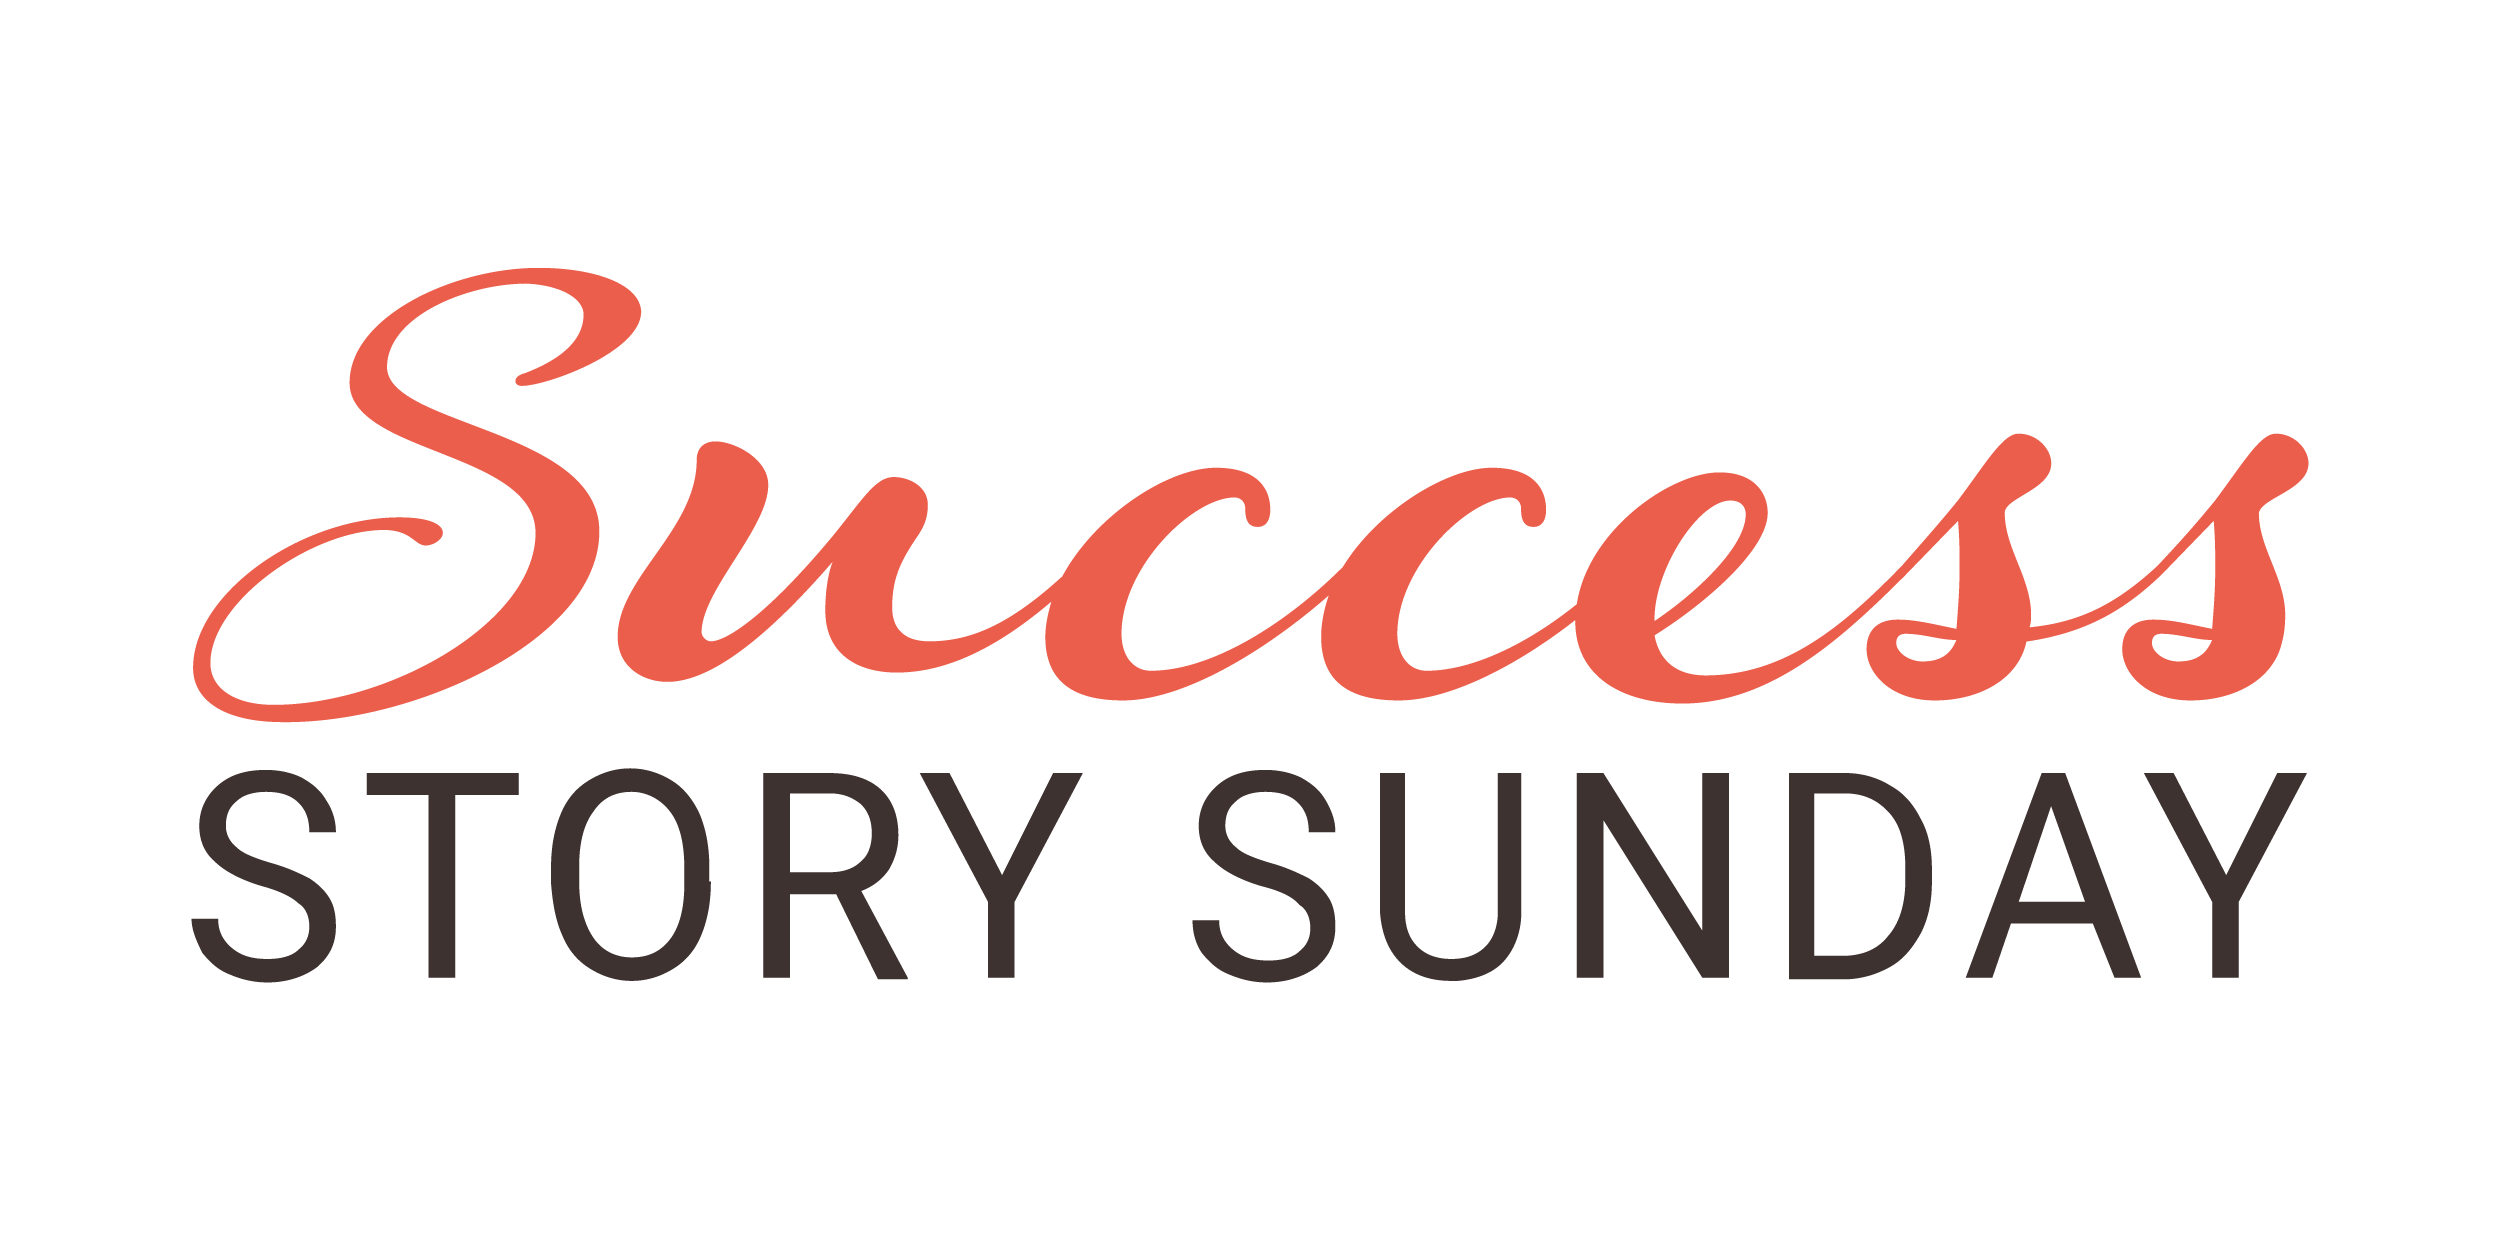 Dennis Nafte Success Story Sunday